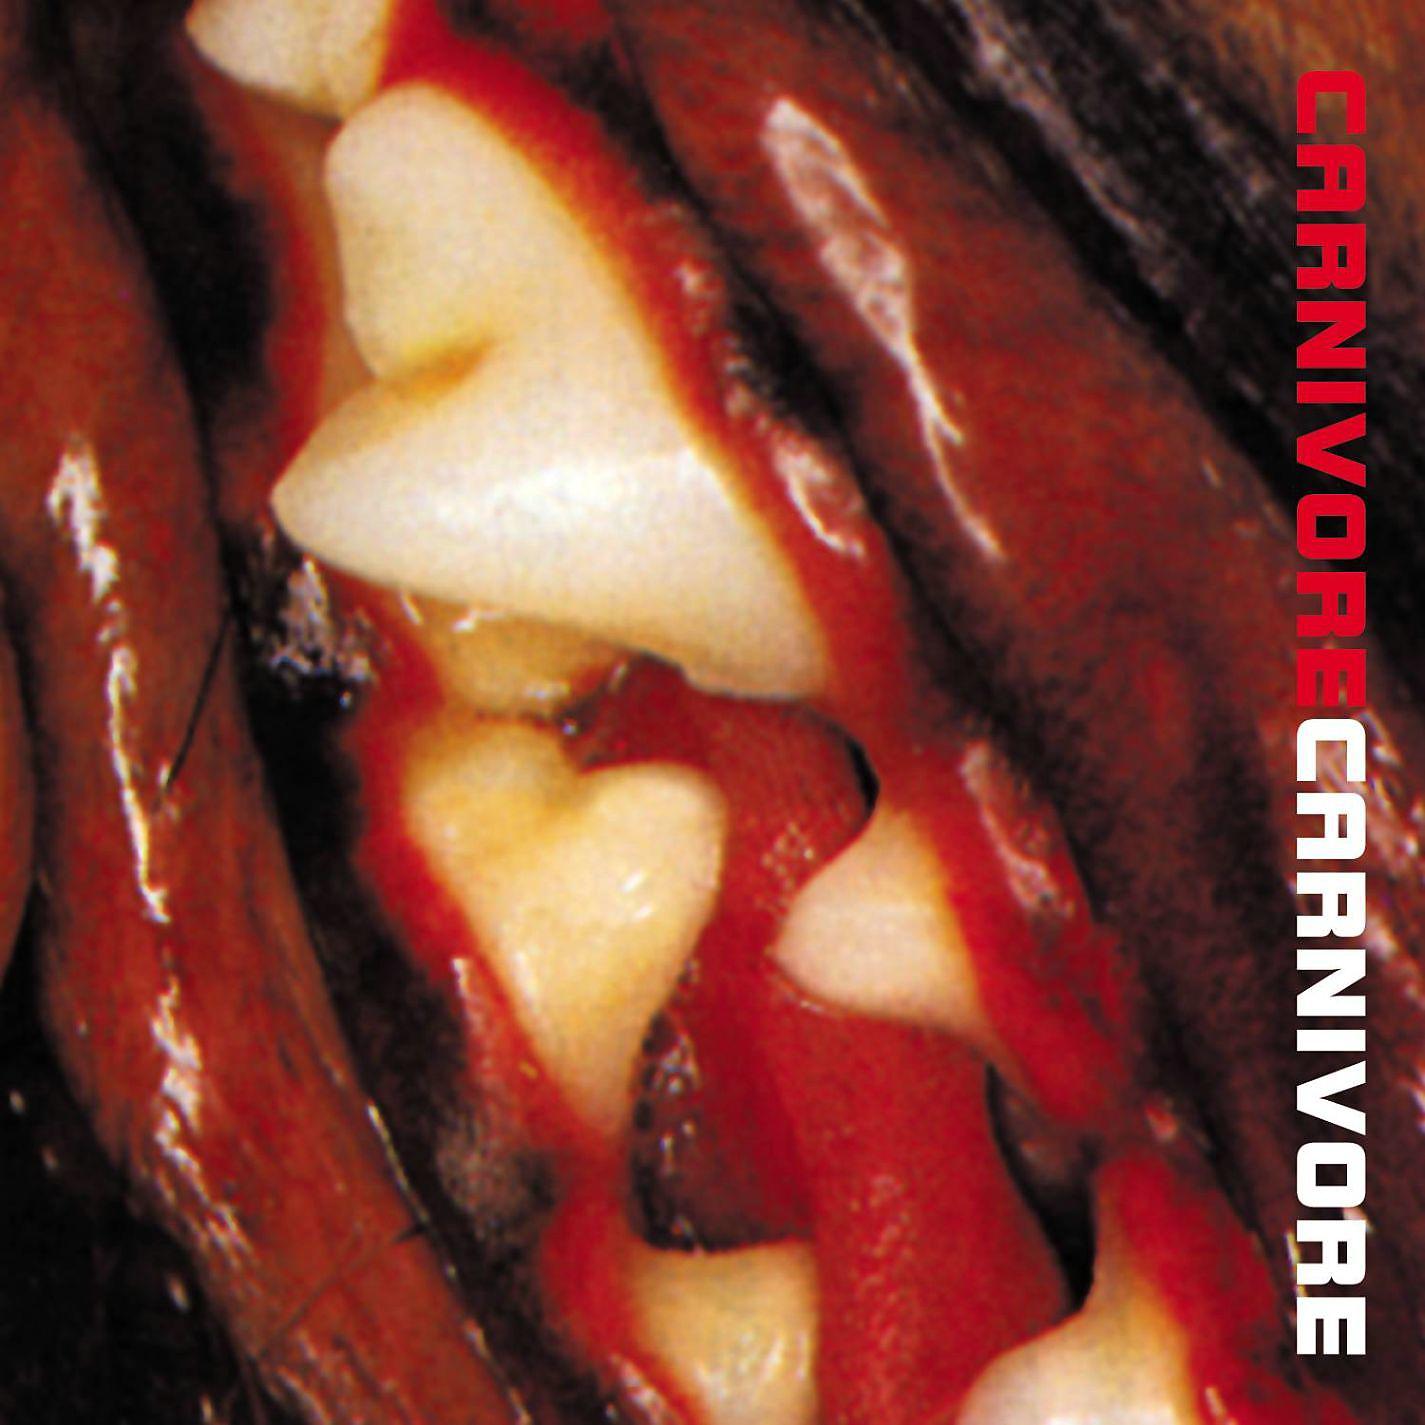 Постер альбома Carnivore